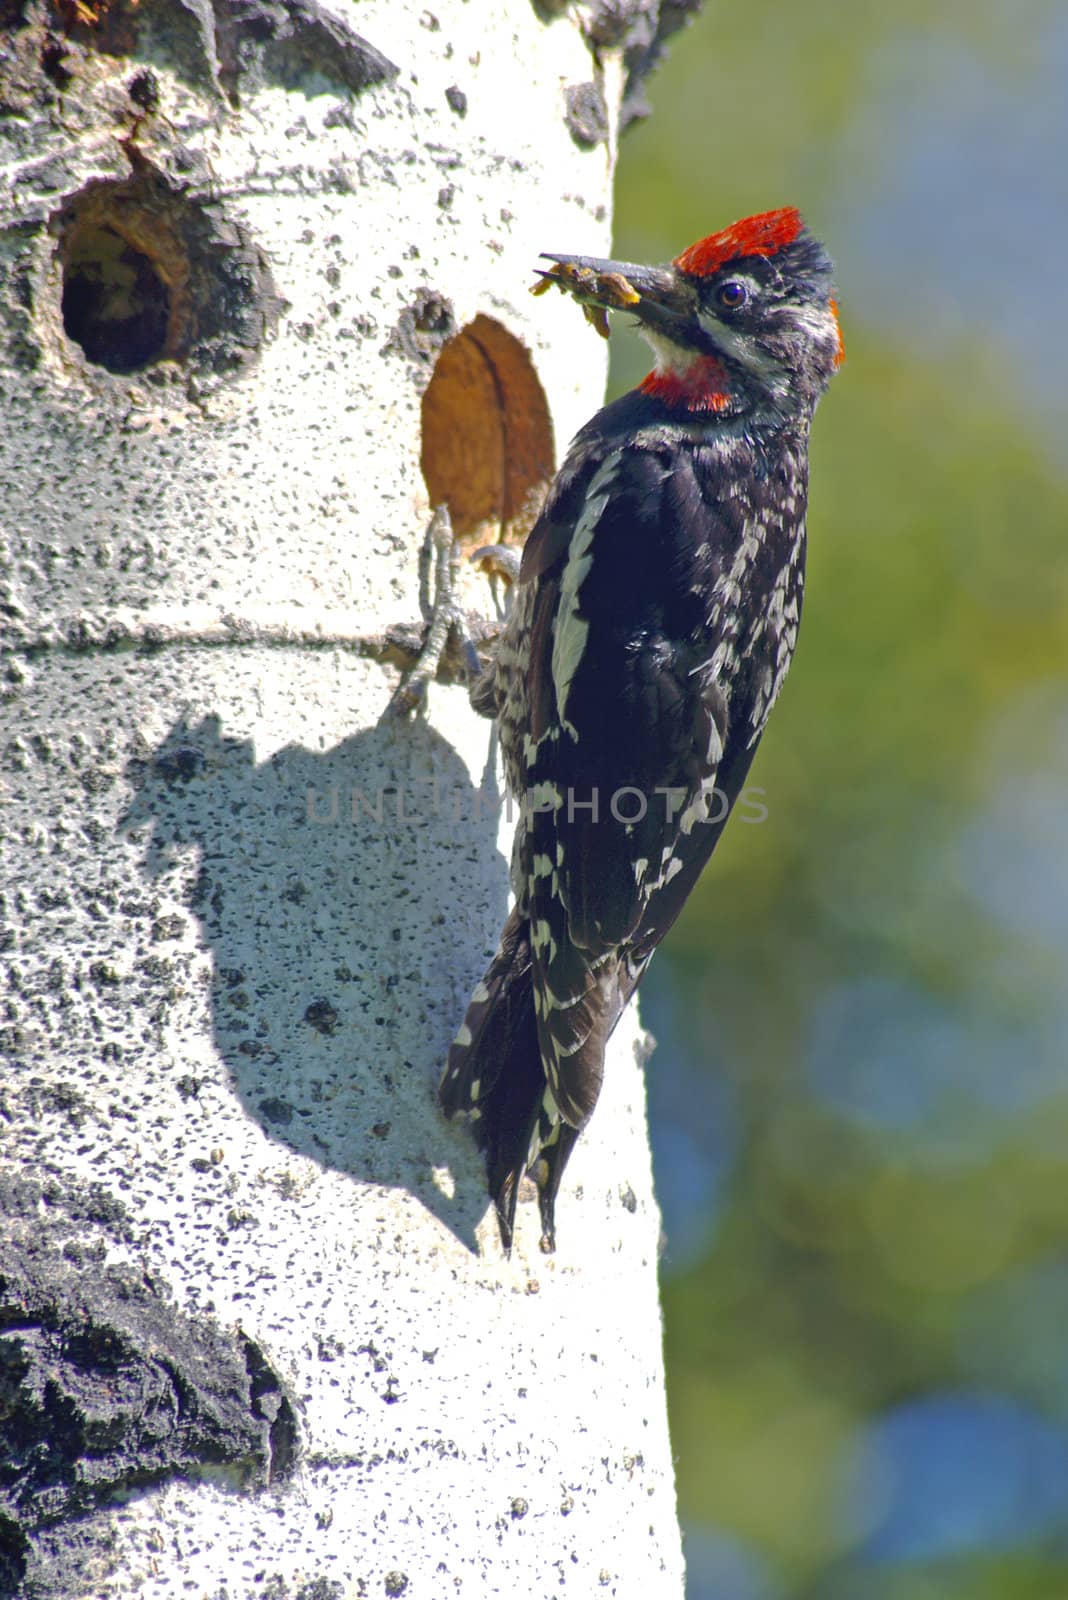 Woodpecker feeding it's young in a nest